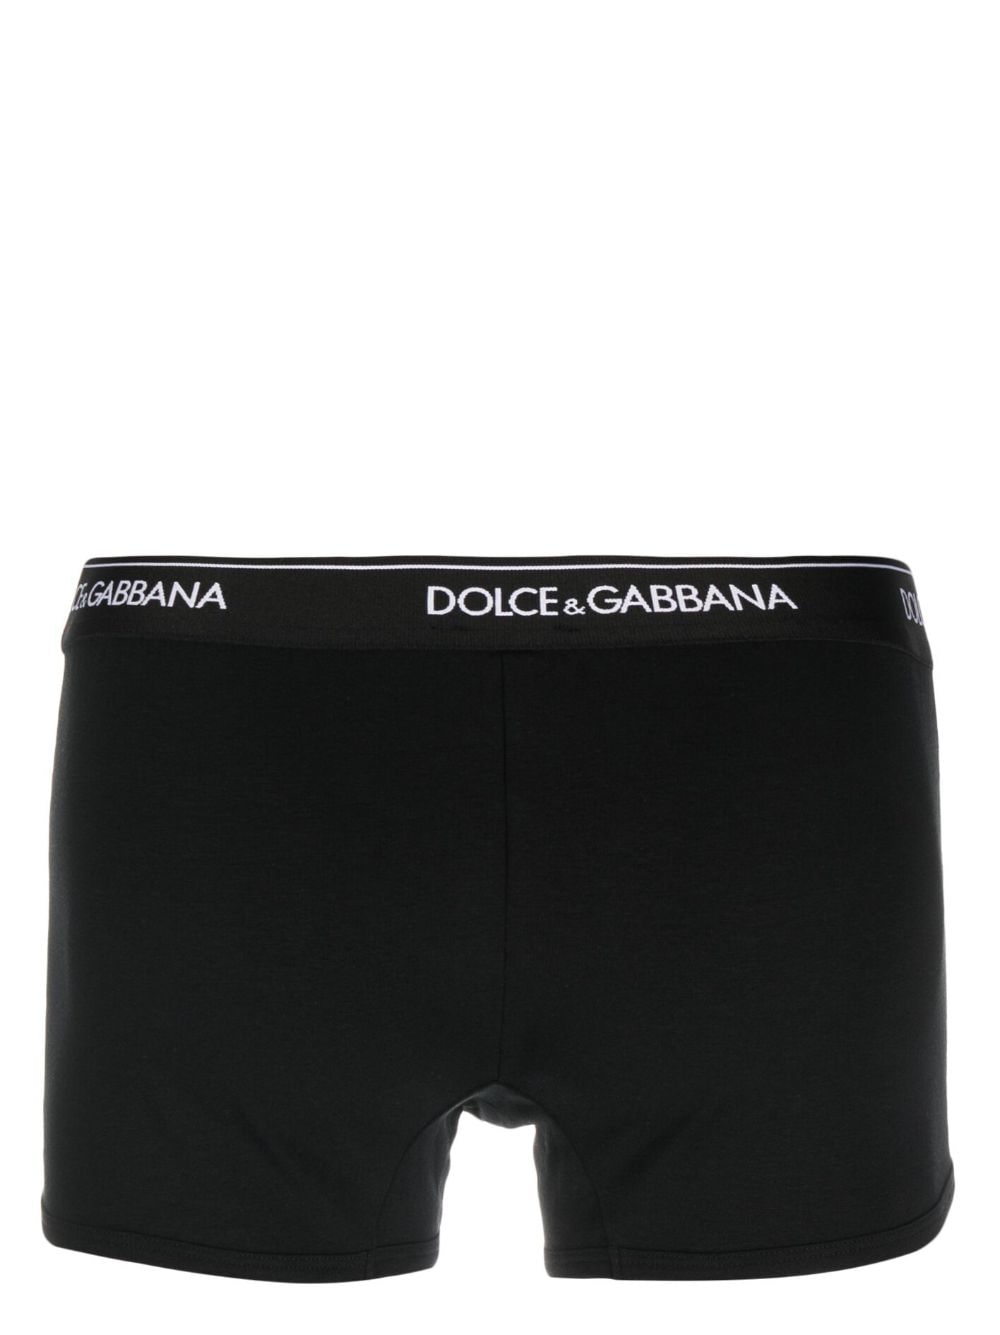 Dolce & Gabbana, Logo-Waist Cotton Boxers